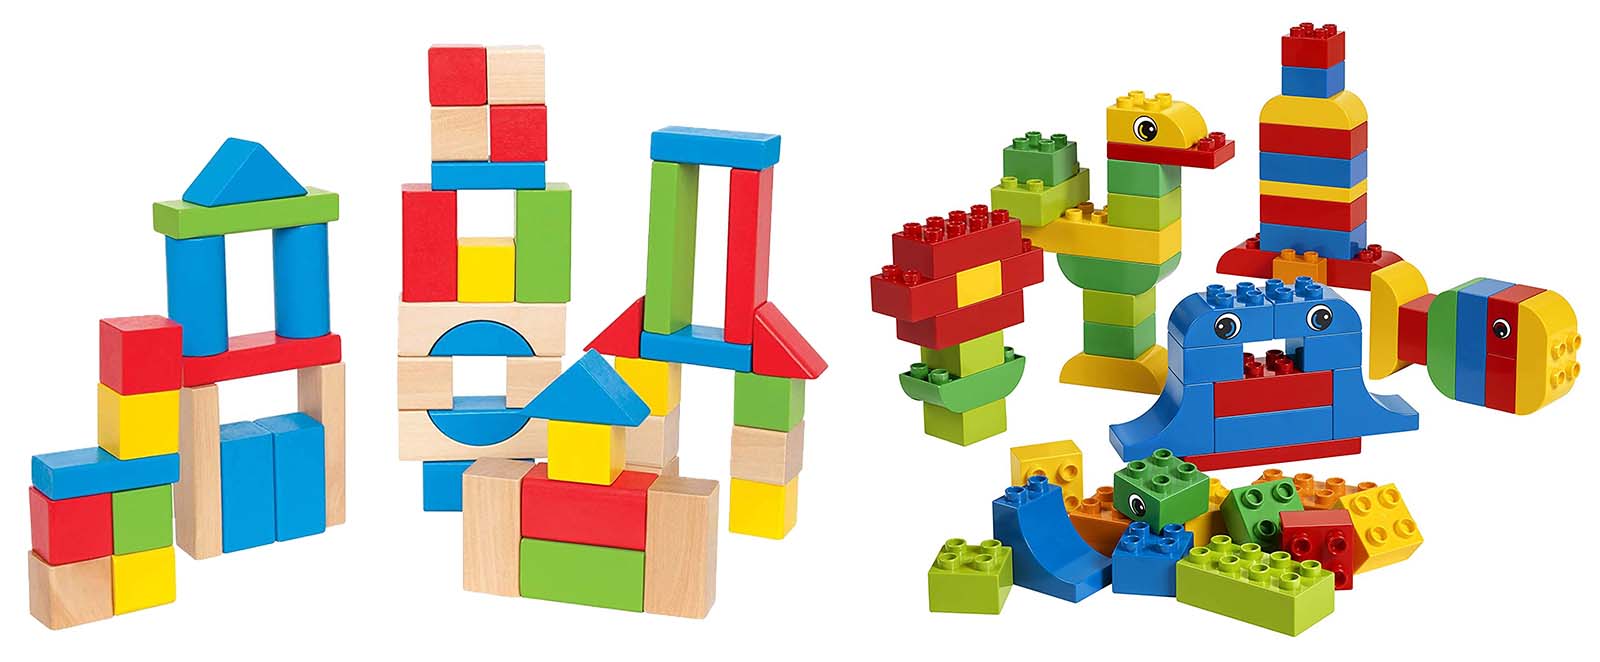 building block, building blocks, building brick, building bricks, wooden block, toy block, toy blocks, toy bricks